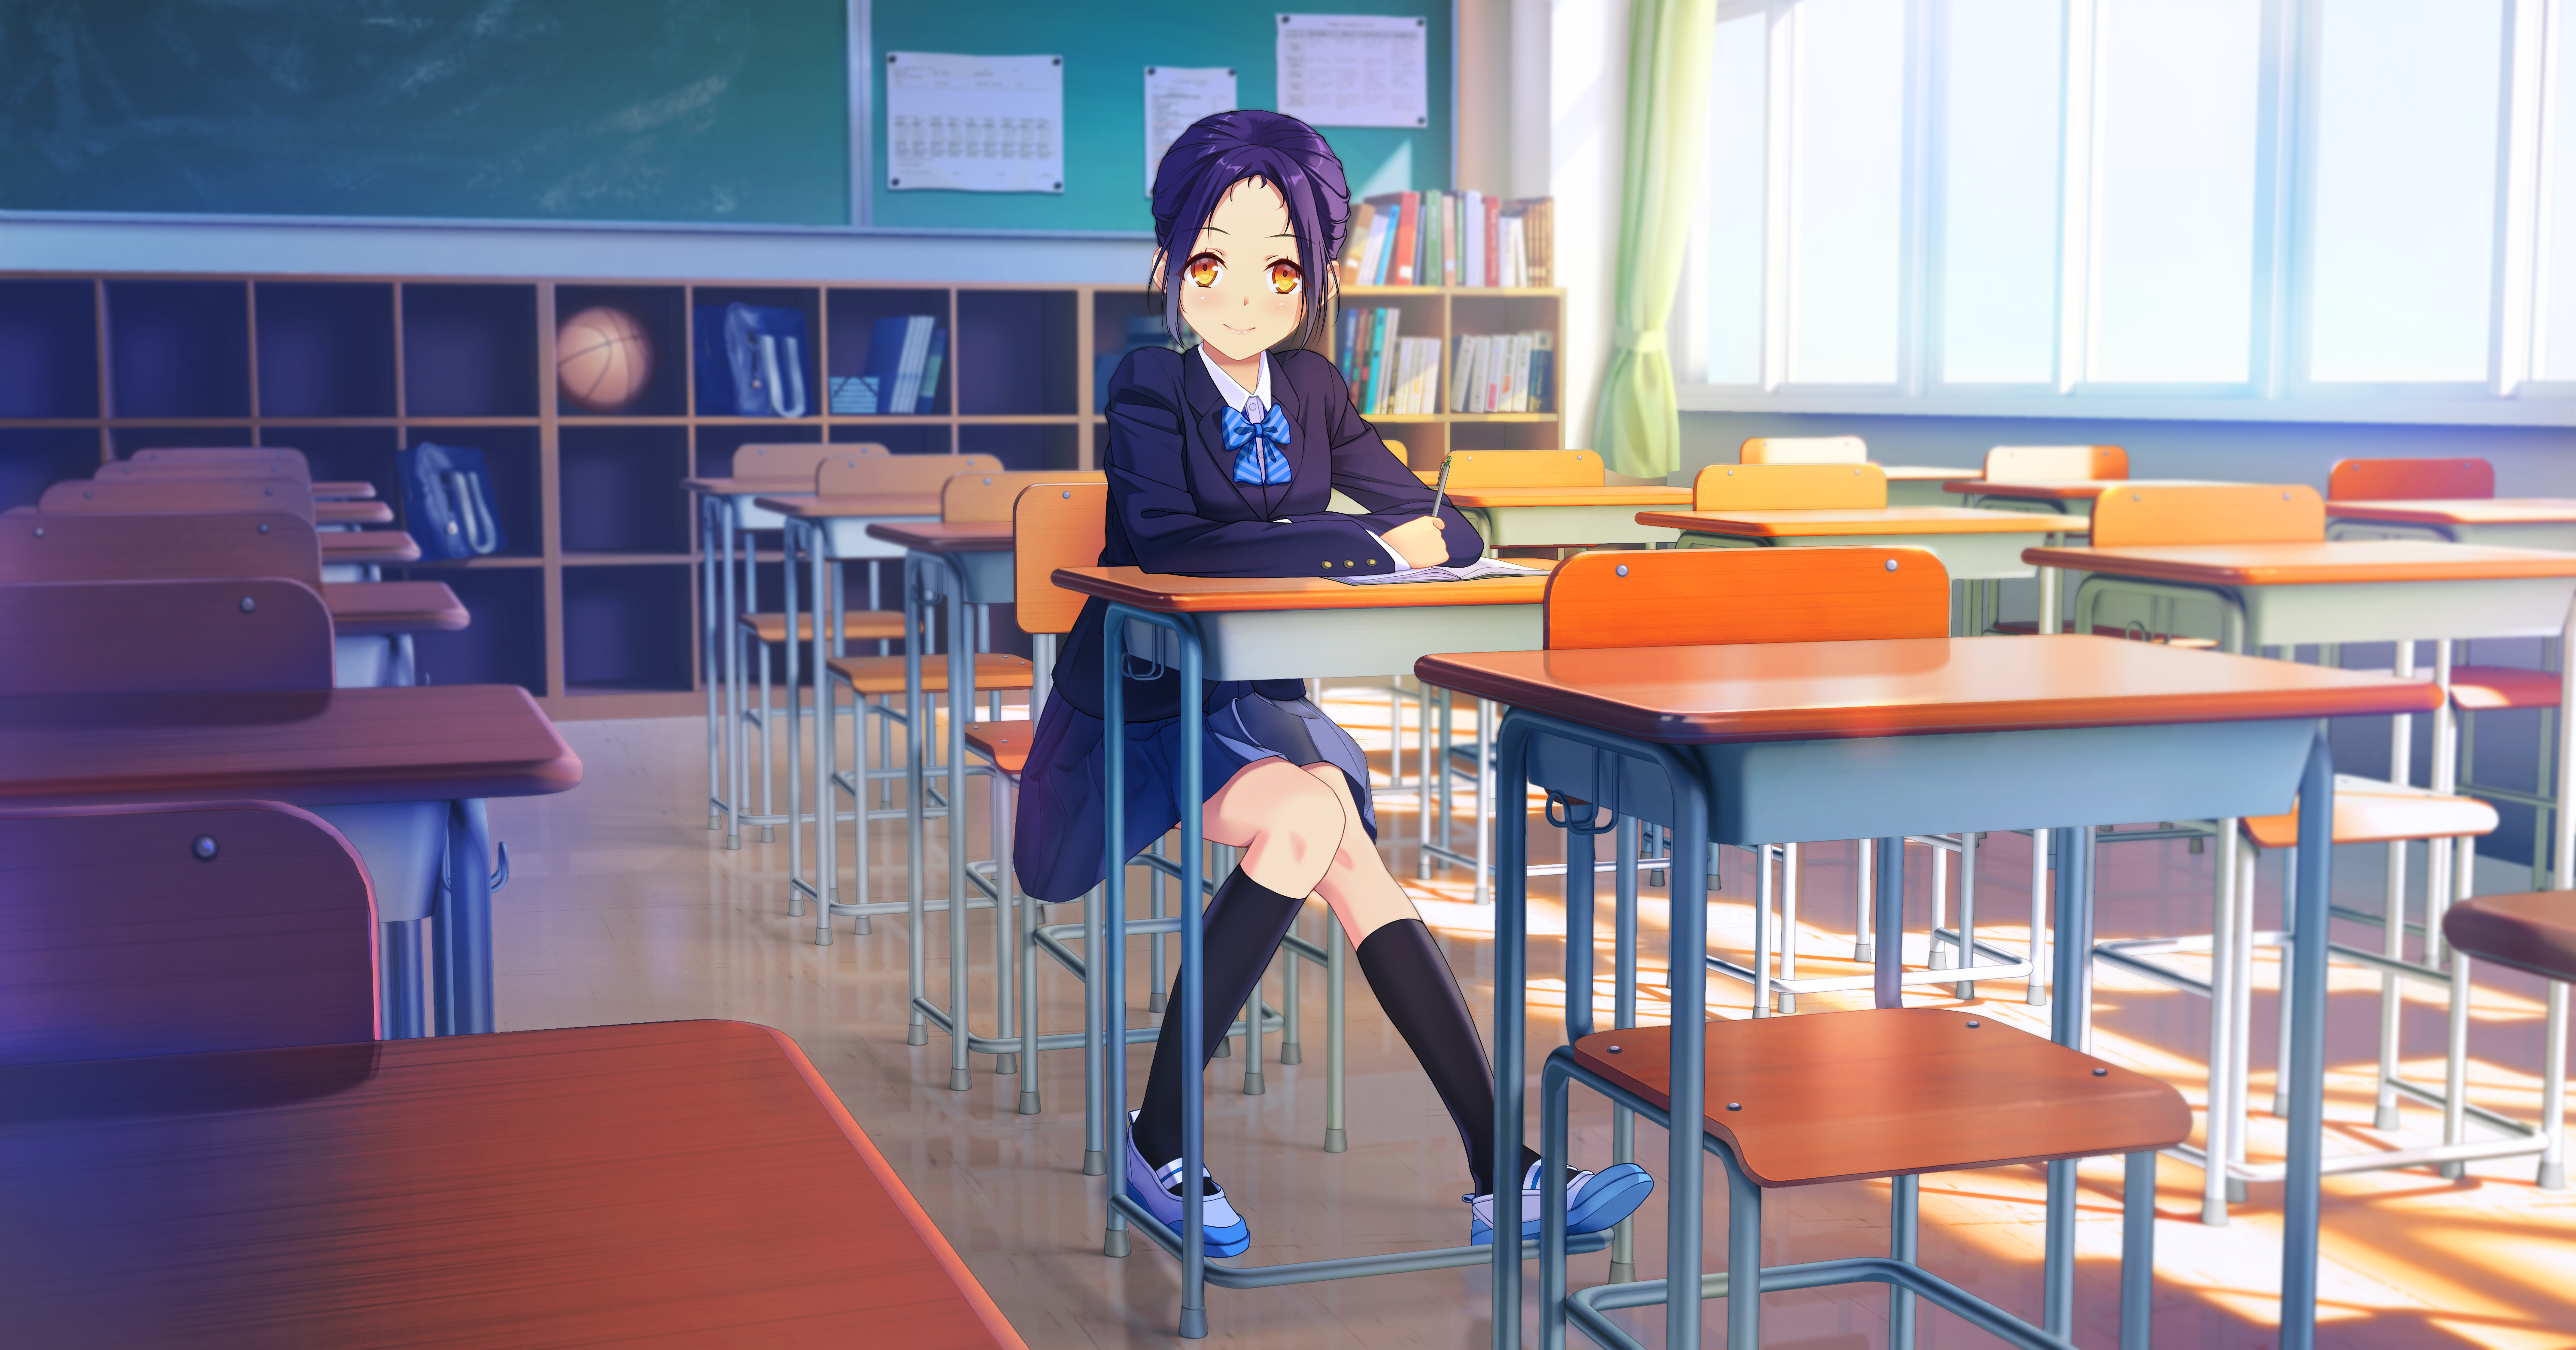 HD desktop wallpaper: Anime, Girl, School, Classroom download free picture  #892896